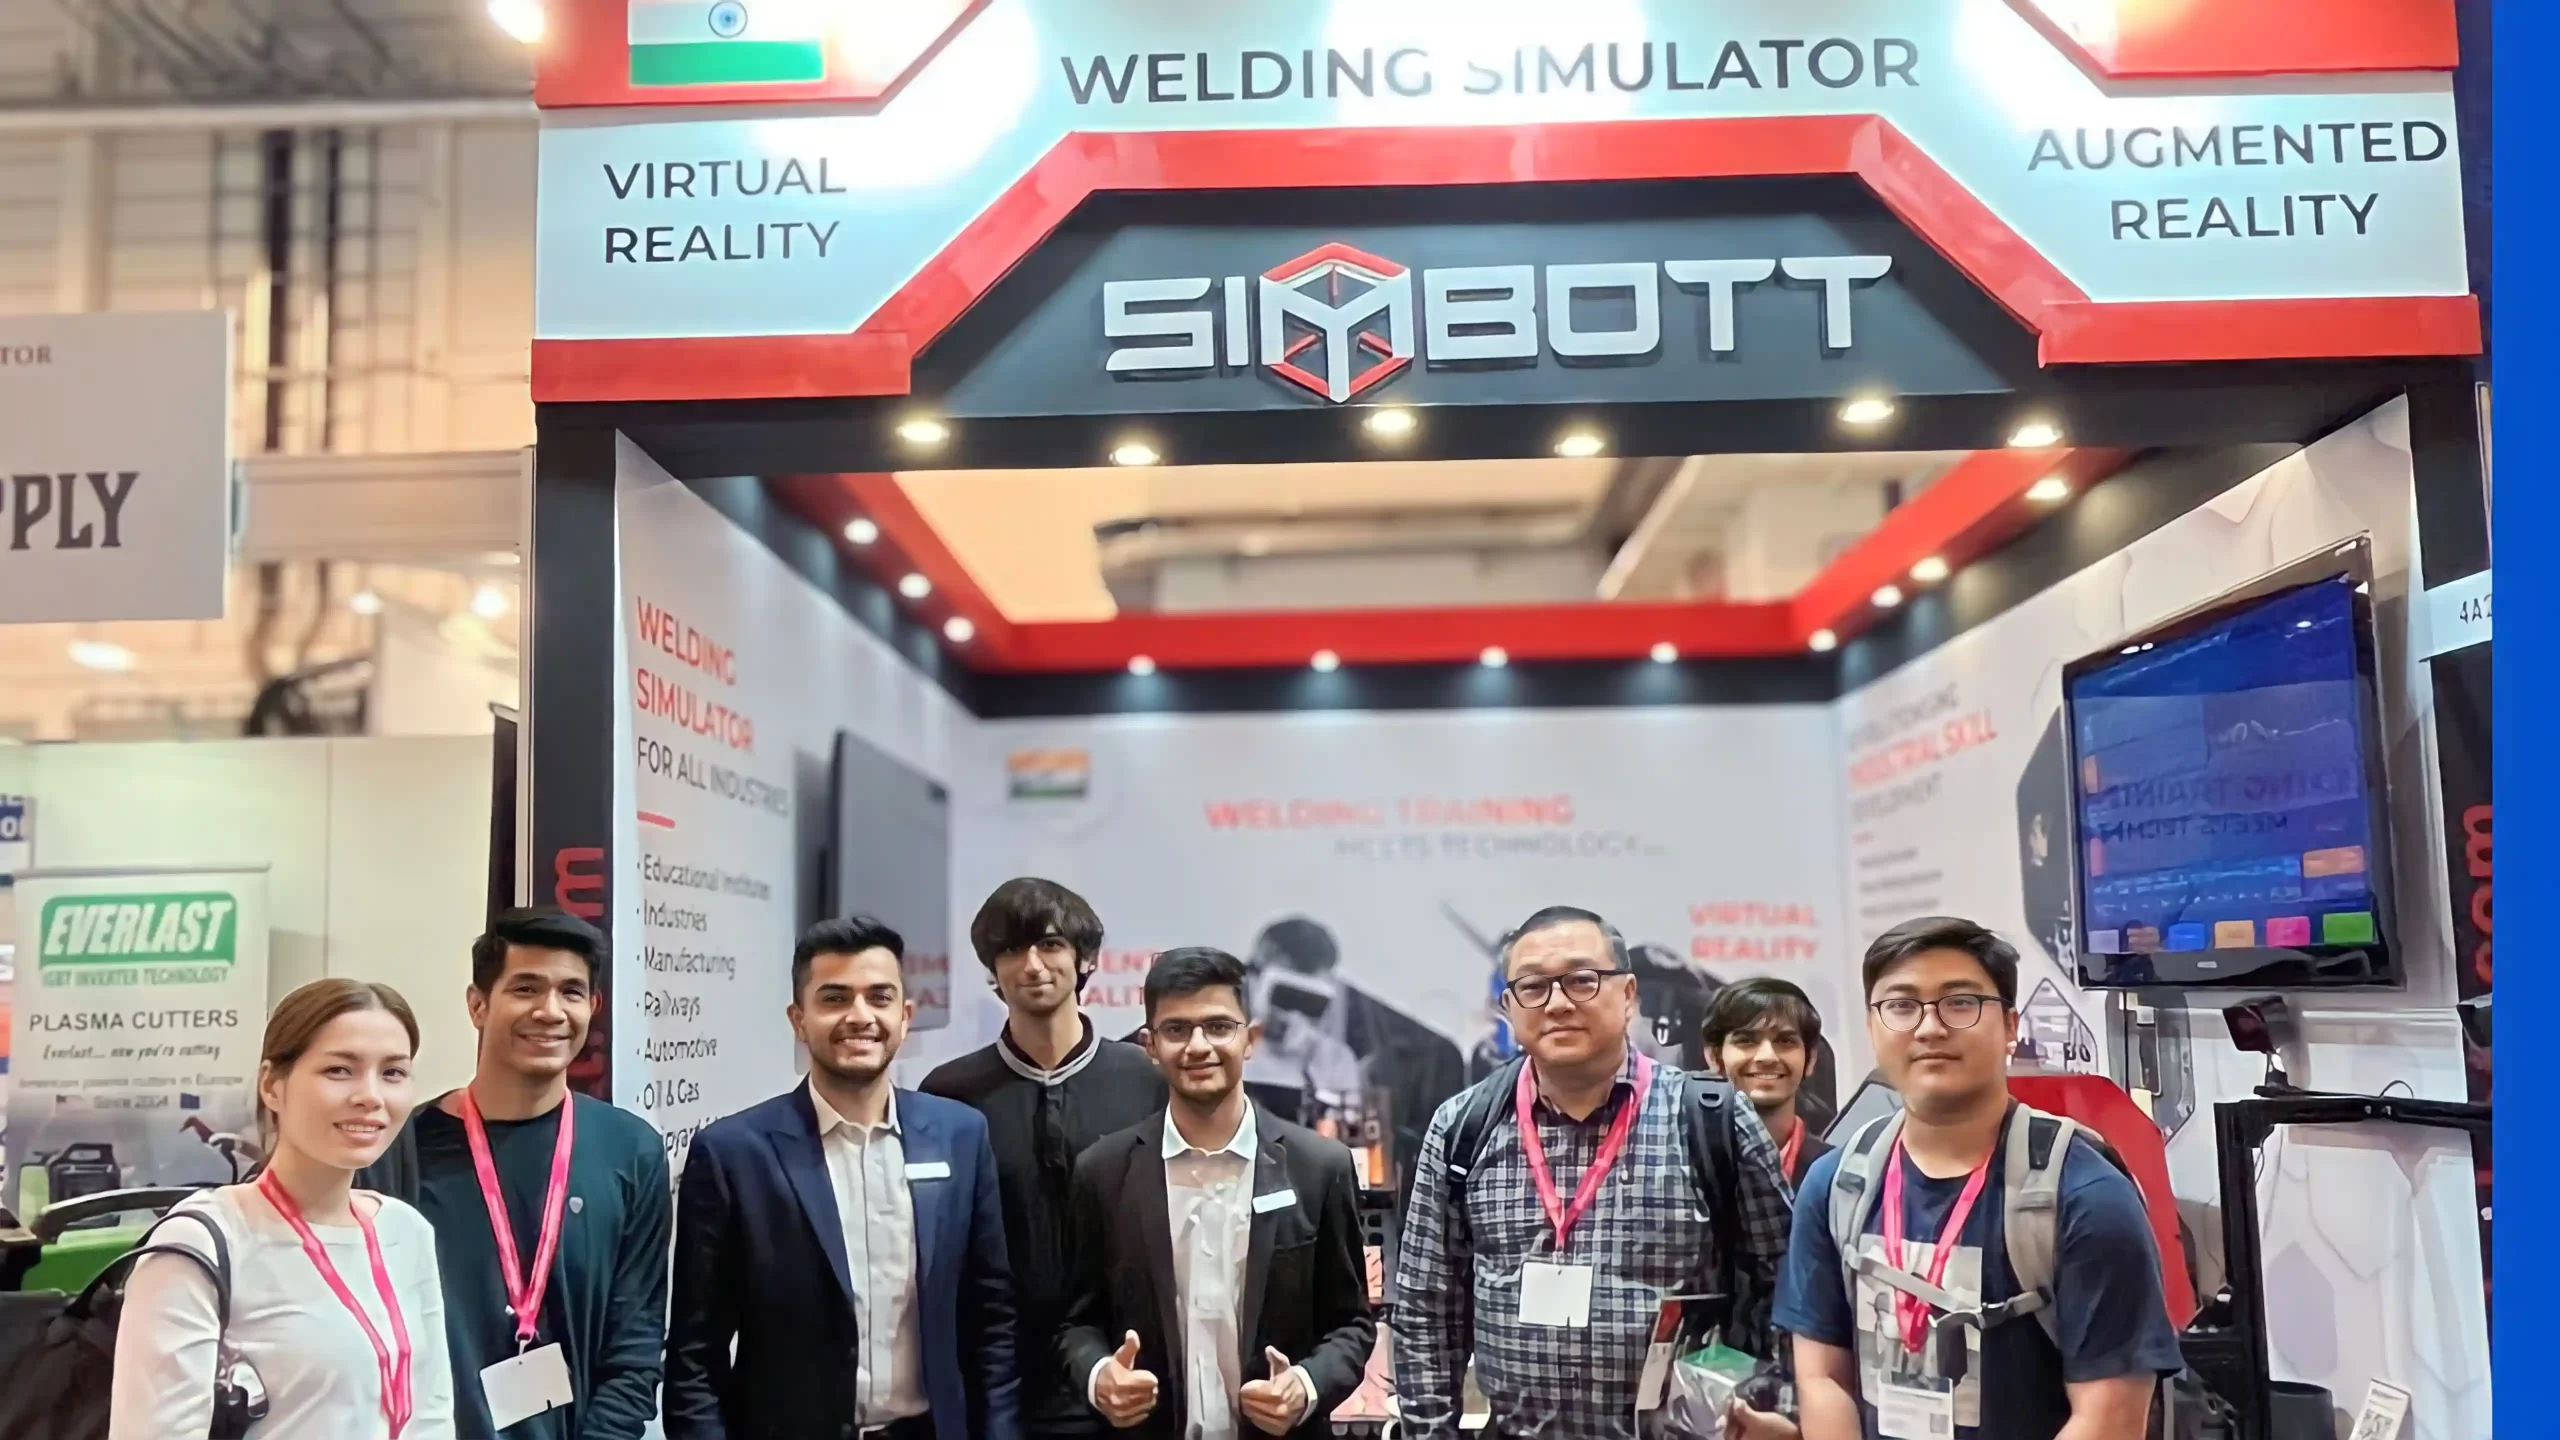 Simbott Virtual Reality Welding Simulator exhibition At germany